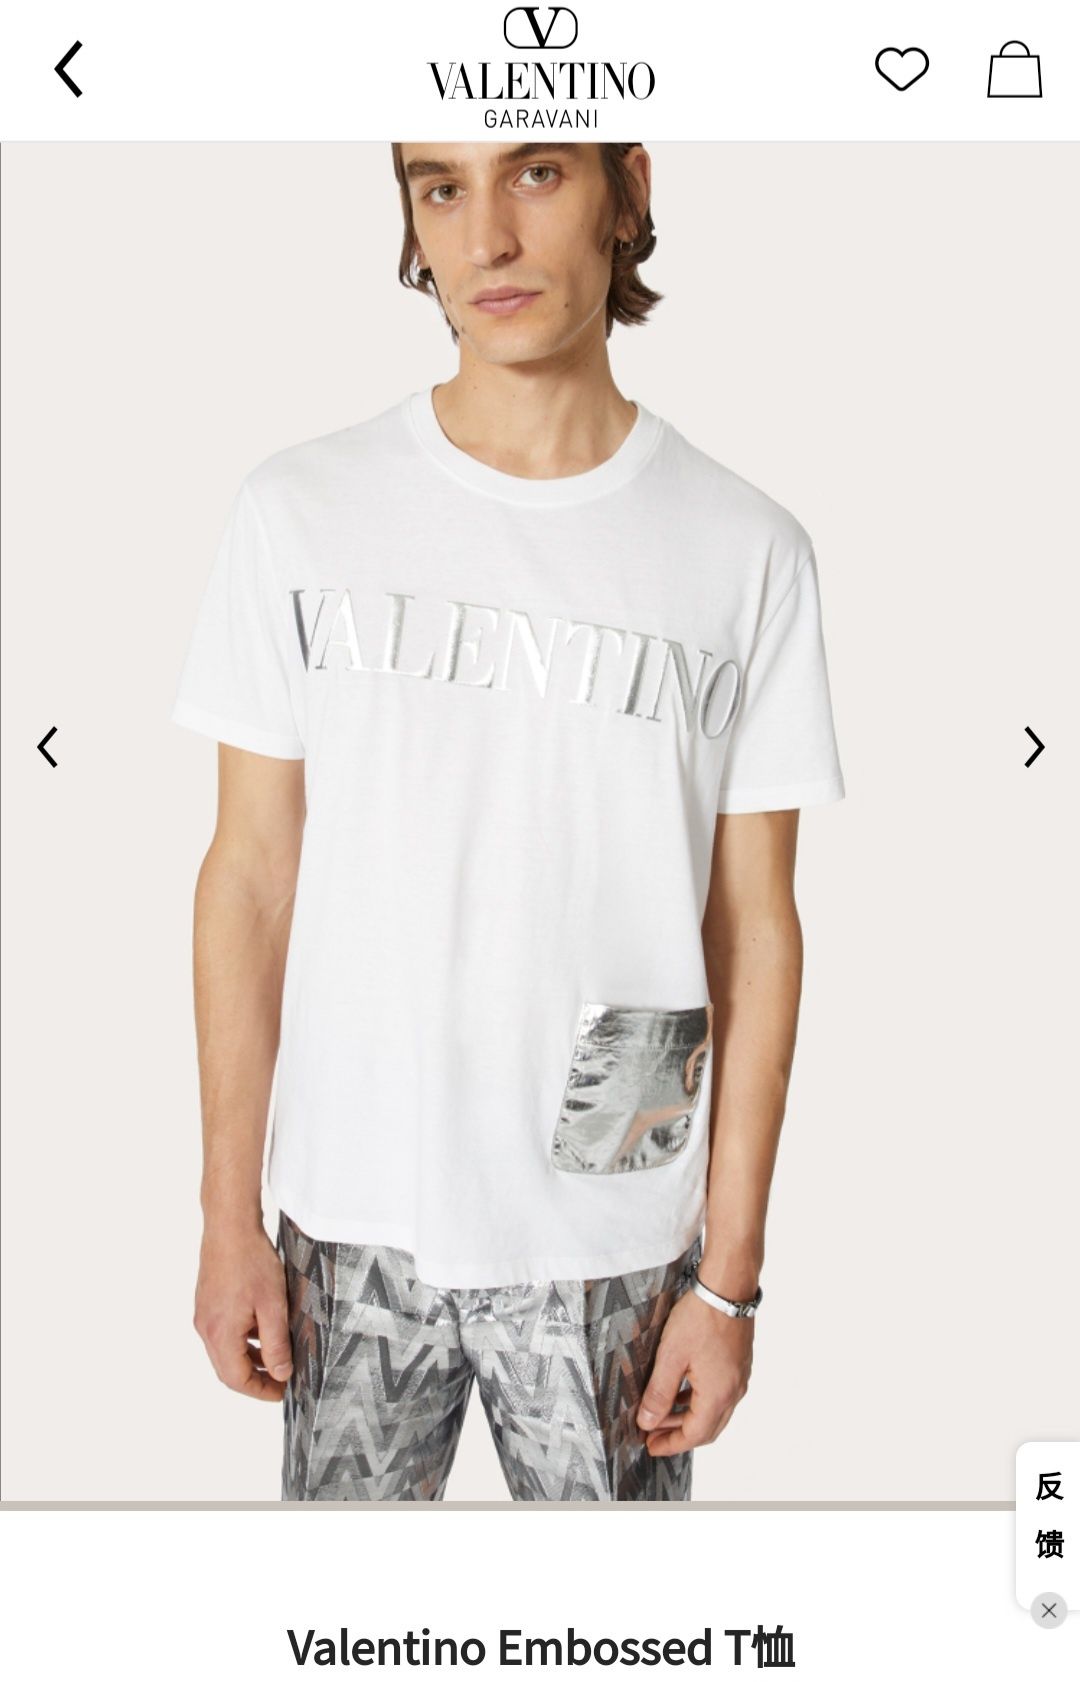 Valentino Garavani embossed silver pocket T-shirt